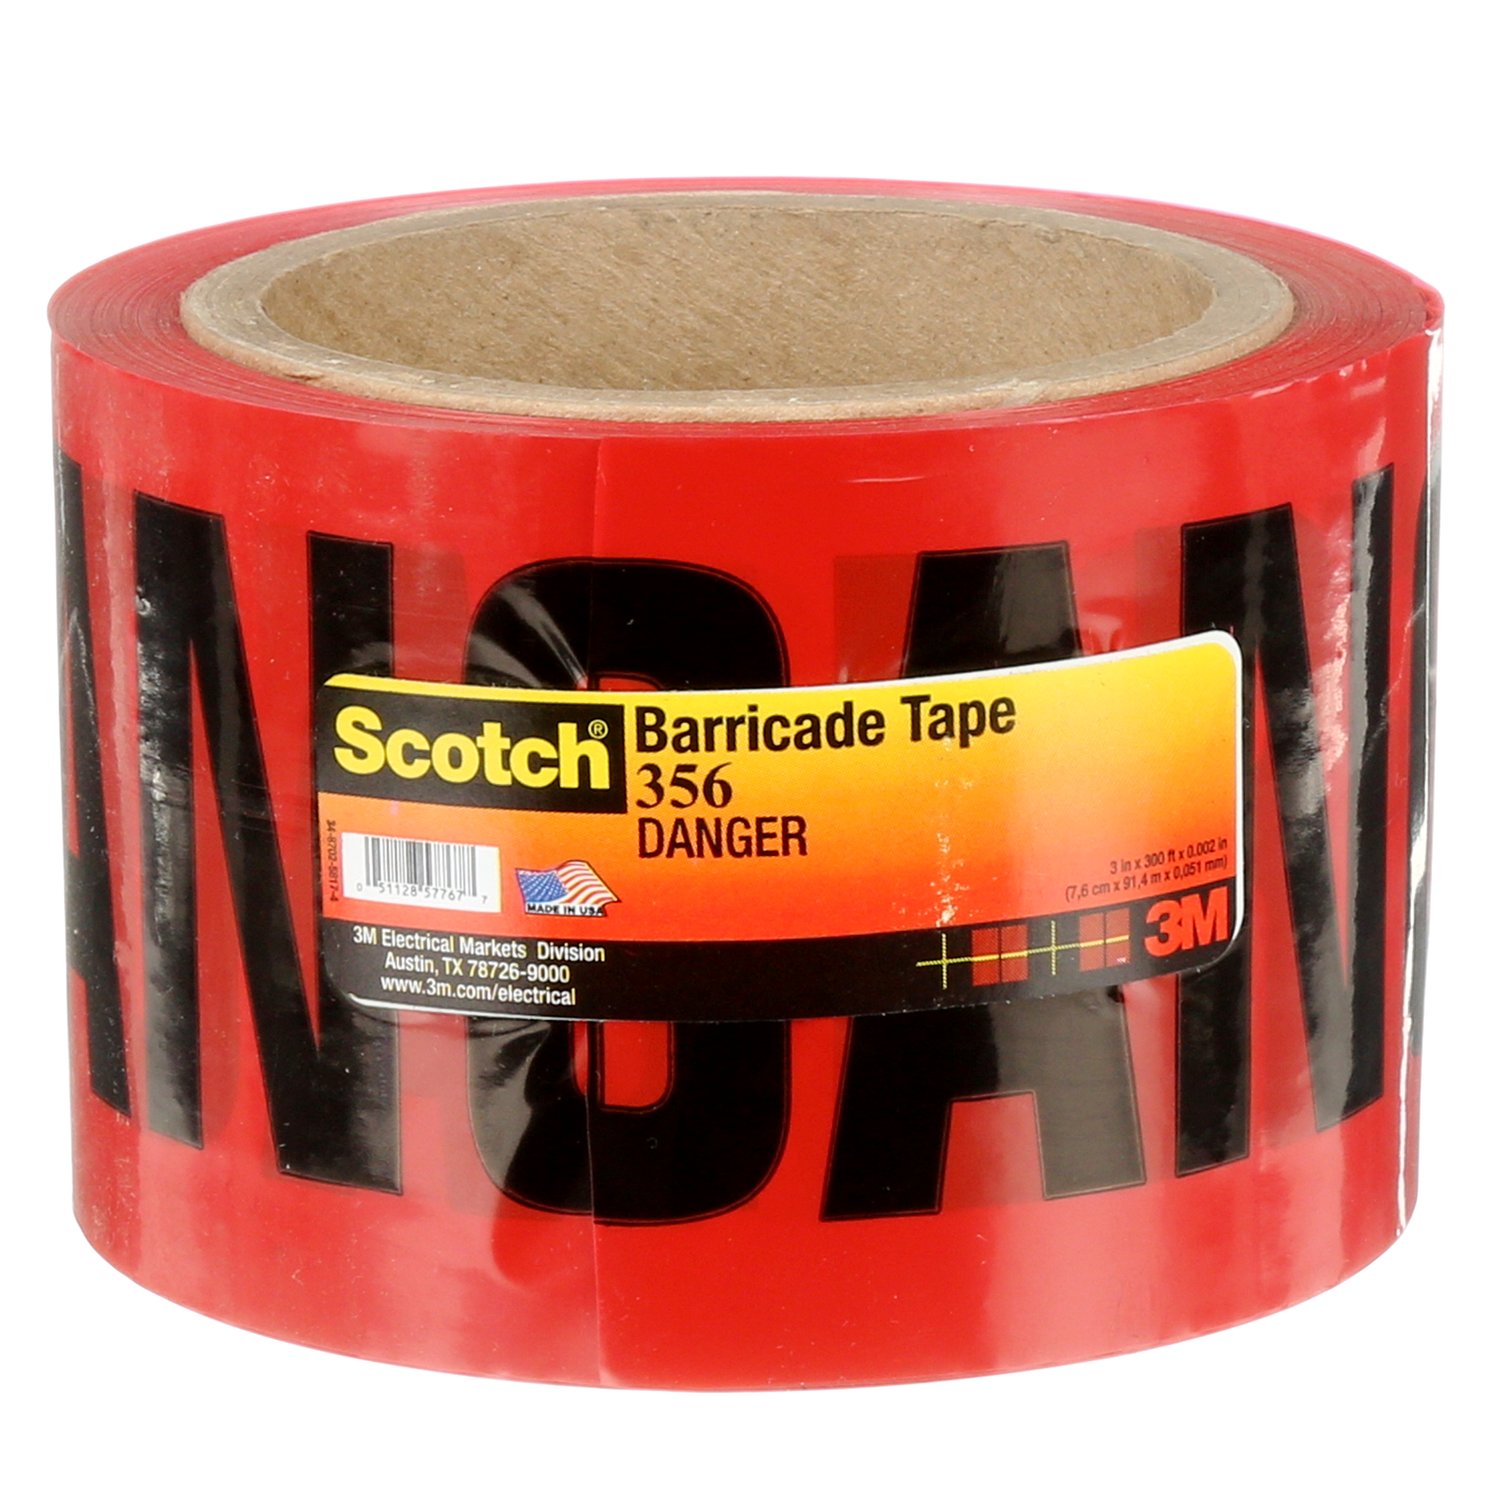 7000133182 - Scotch Barricade Tape 356, DANGER, 3 in x 300 ft, Red, 16 rolls/Case